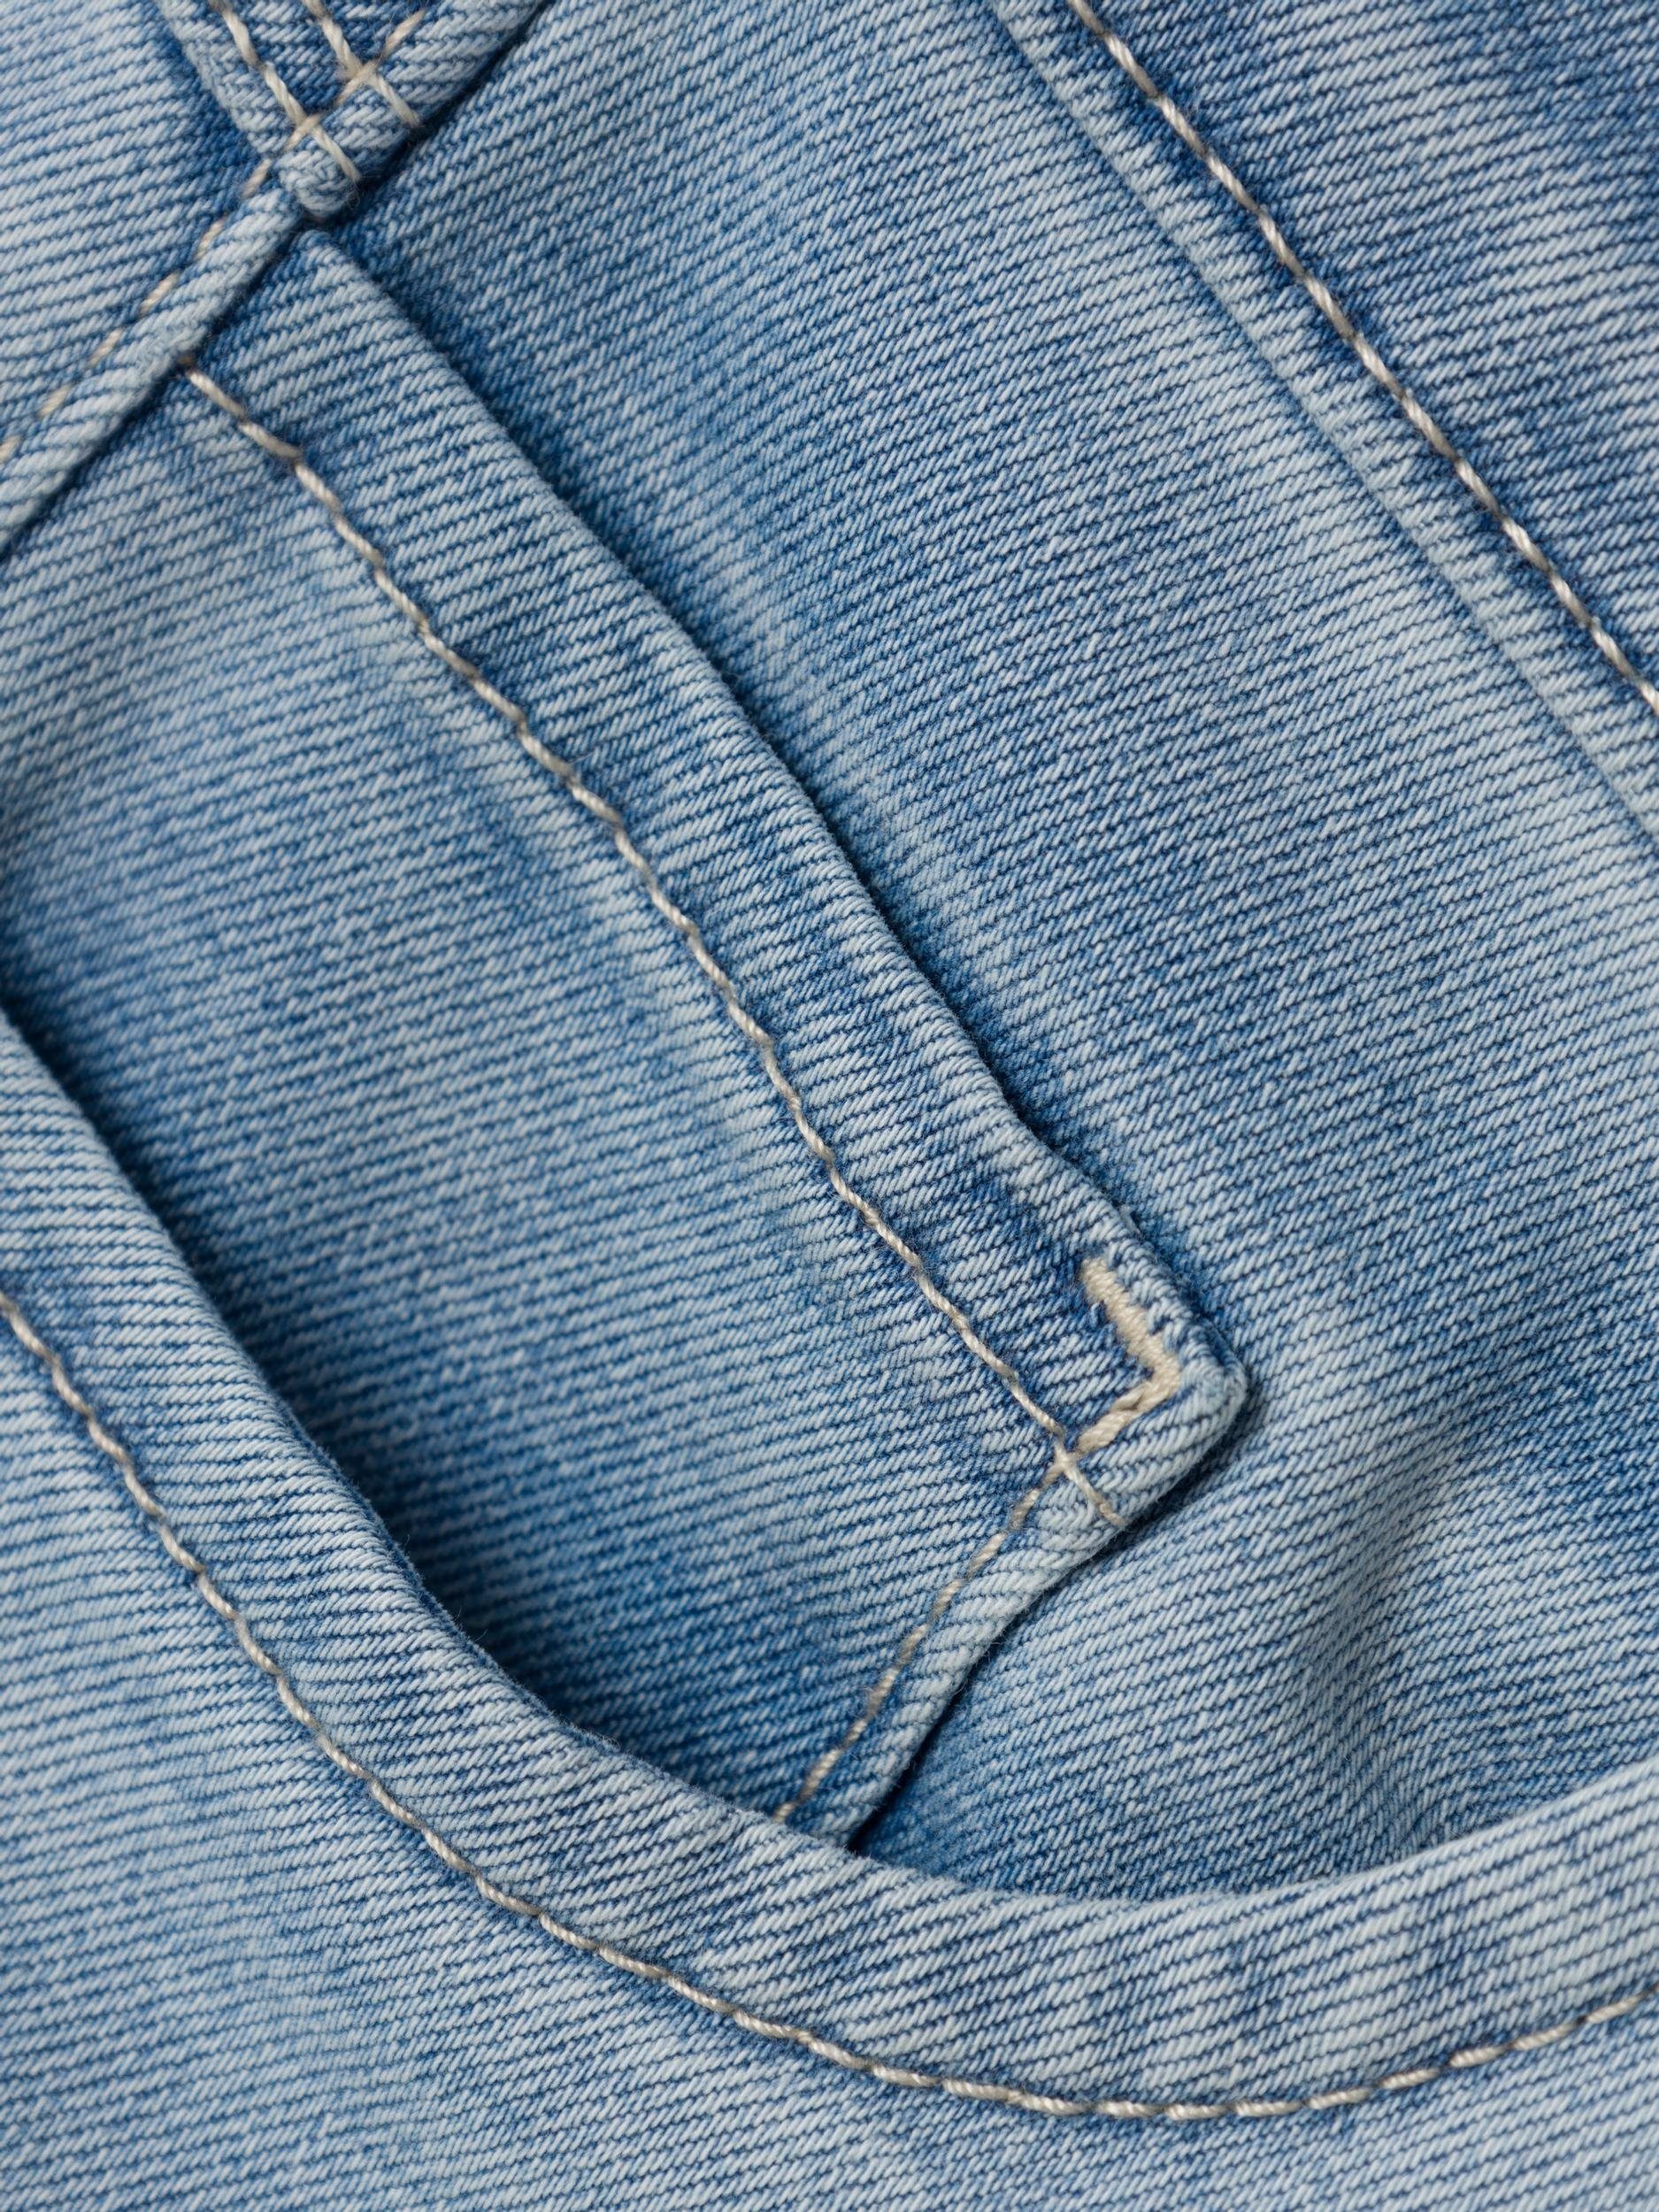 HW WIDE Jeans NOOS JEANS NKFROSE 1356-ON Denim Blue Name Light It Weite